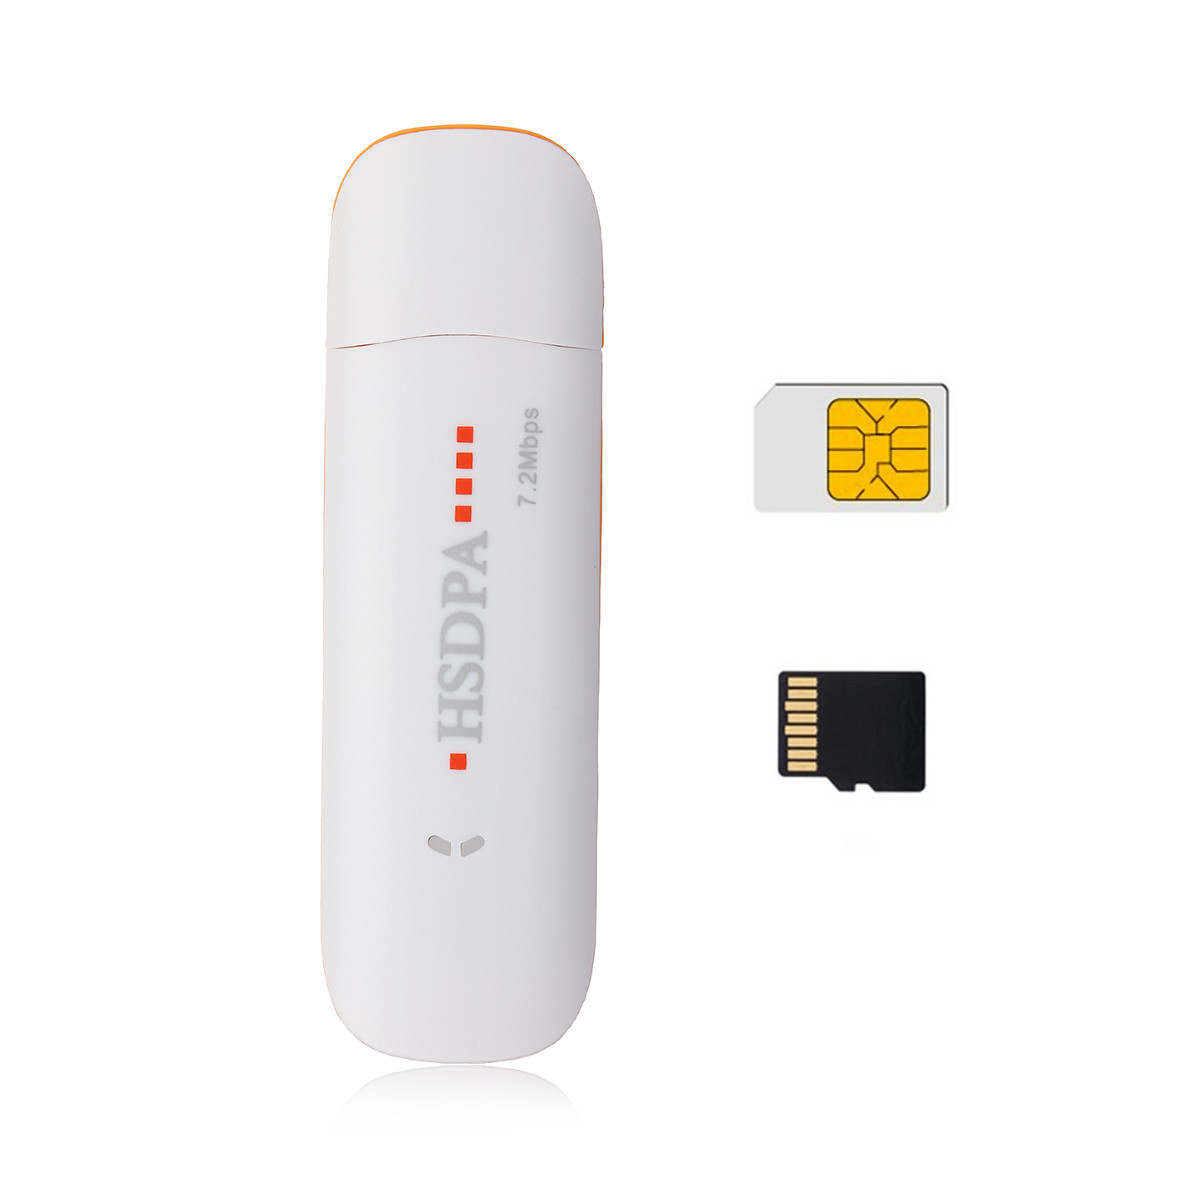 3G-HSDPA--HSUPA-Portable-Wireless-Wifi-Router-USB-Surf-Stick-Dongle-Mobile-Broadband-Modem-1646616-7